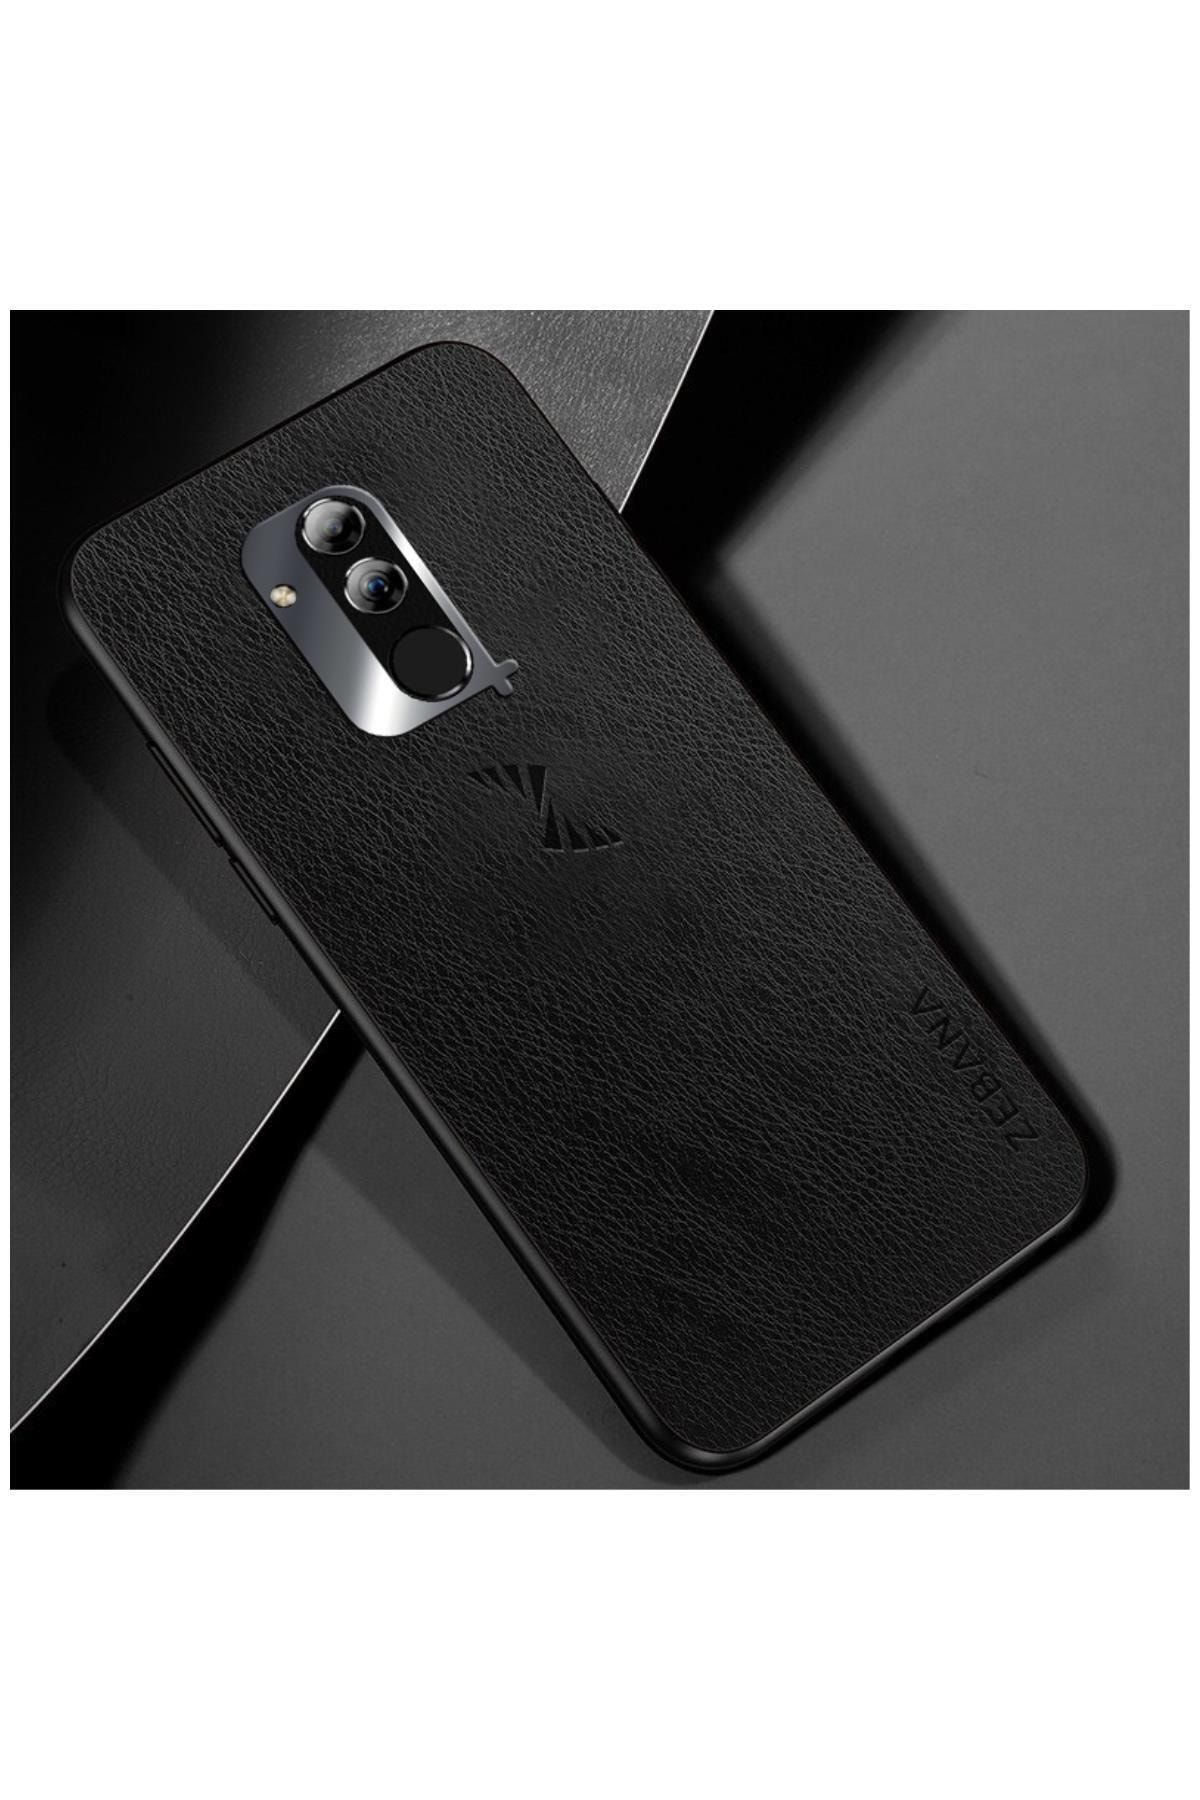 Dara Aksesuar Huawei Mate 20 Lite Uyumlu Telefon Kılıfı Zebana Klasik Stil Deri Kılıf Siyah